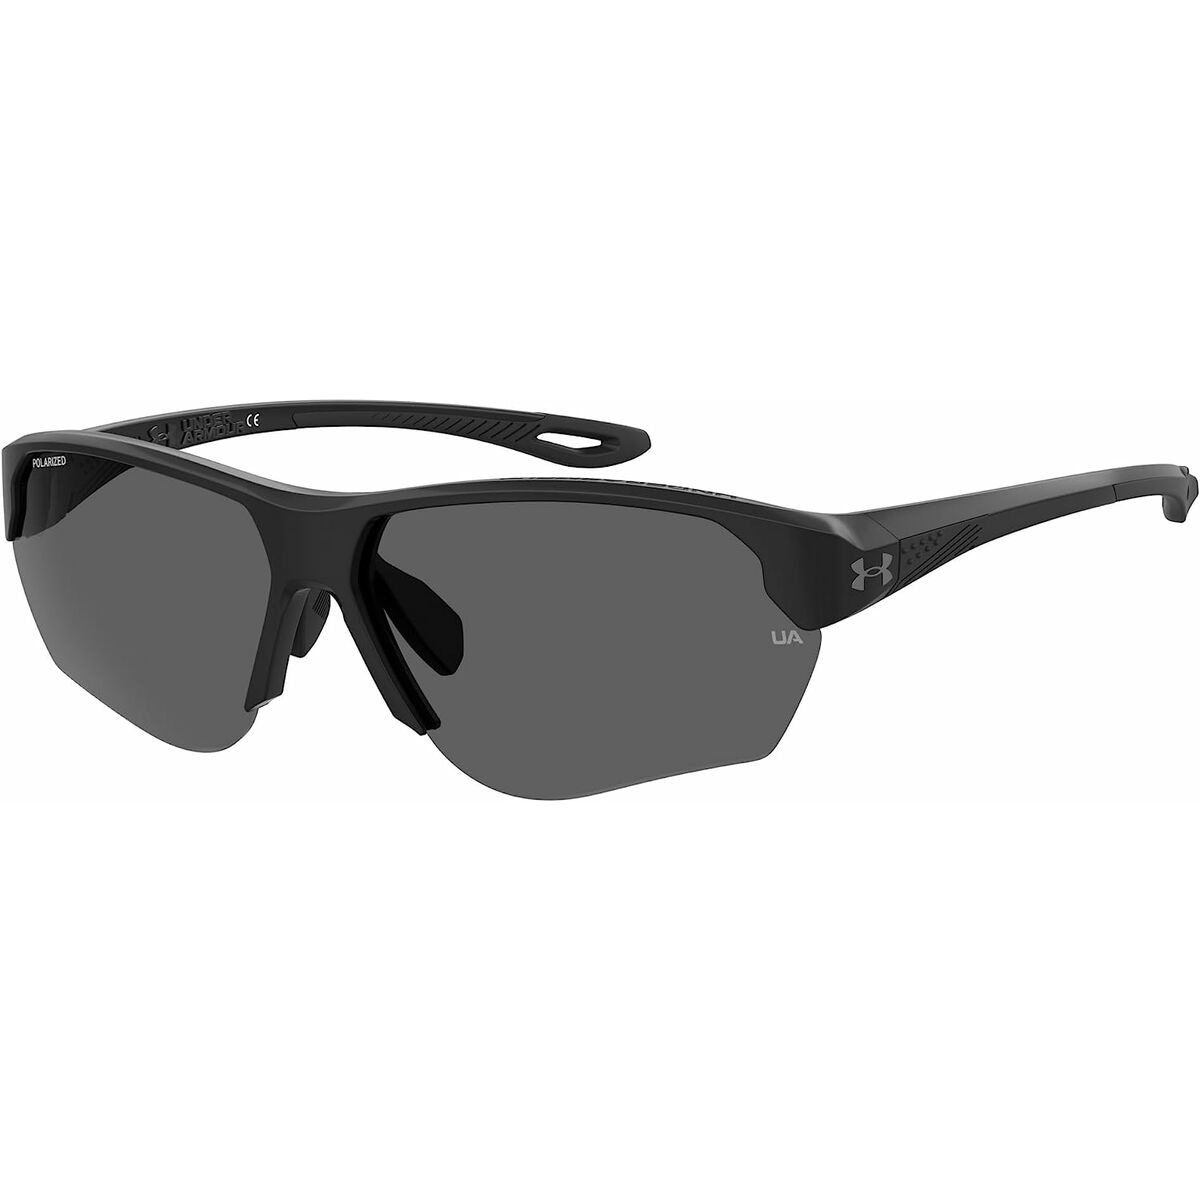 Men's Sunglasses Under Armour UA COMPETE_F - buy, price, reviews in Estonia